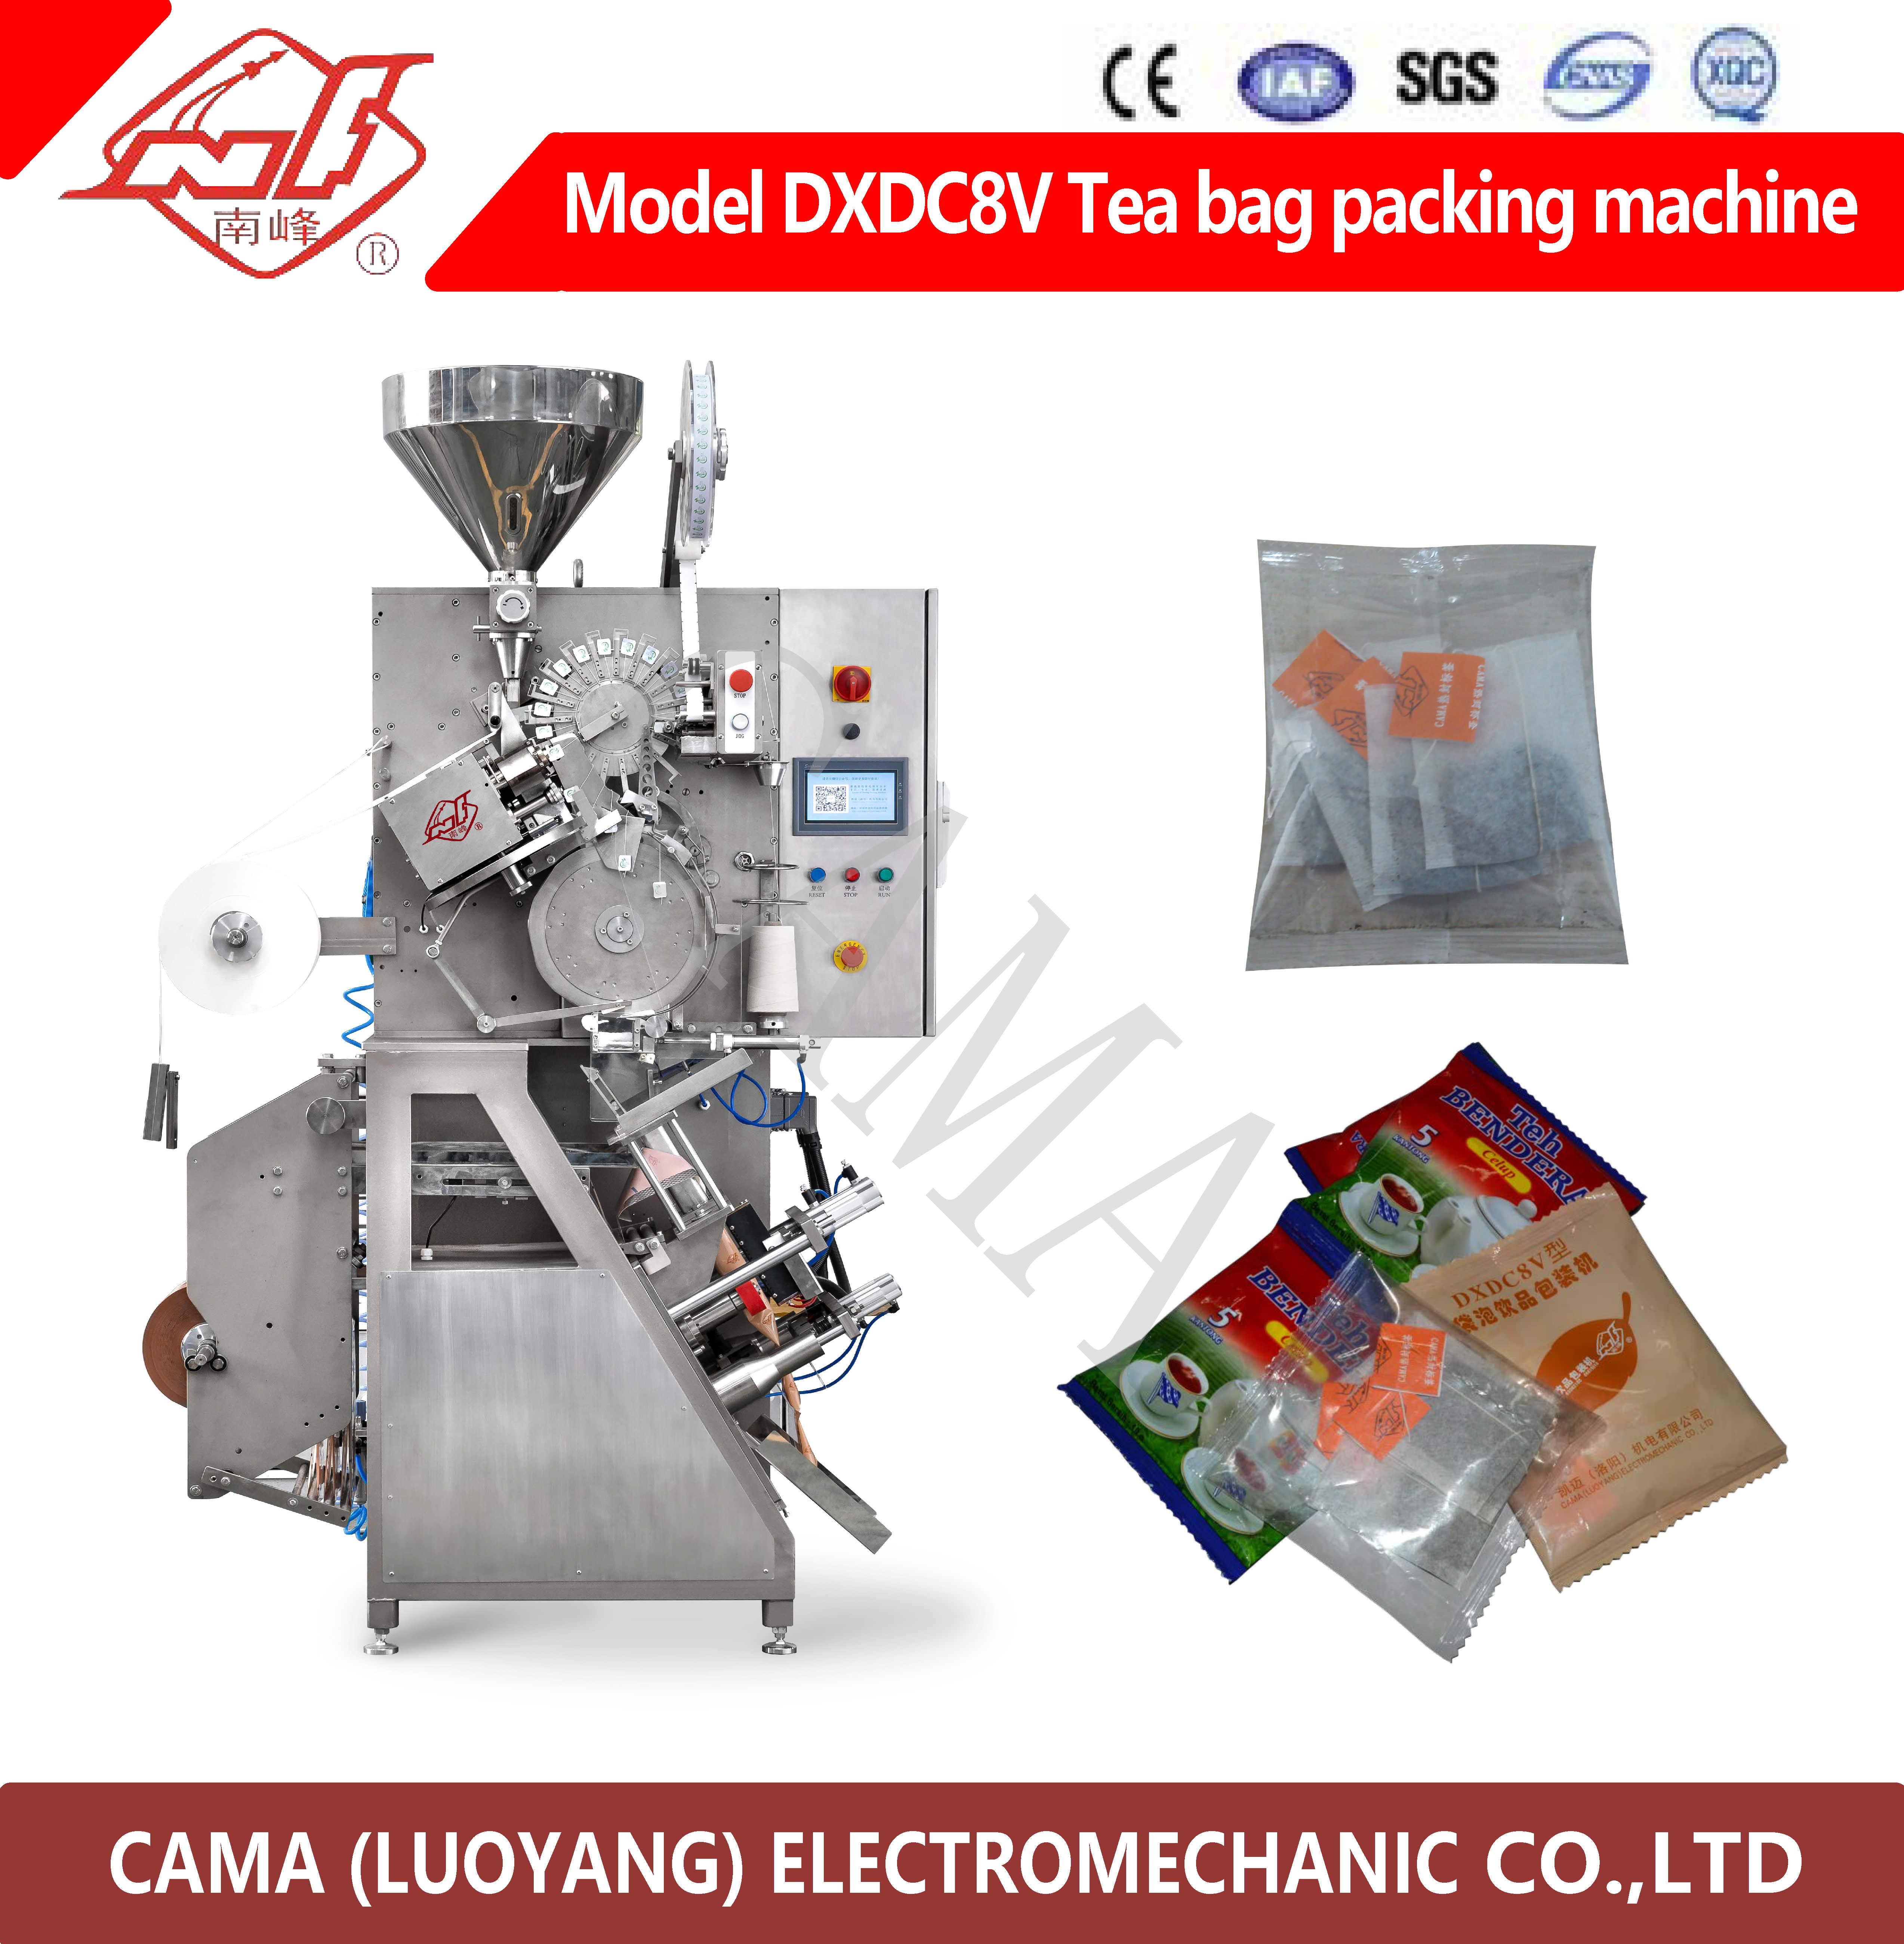 Model DXDC8V Tea bag packing machine